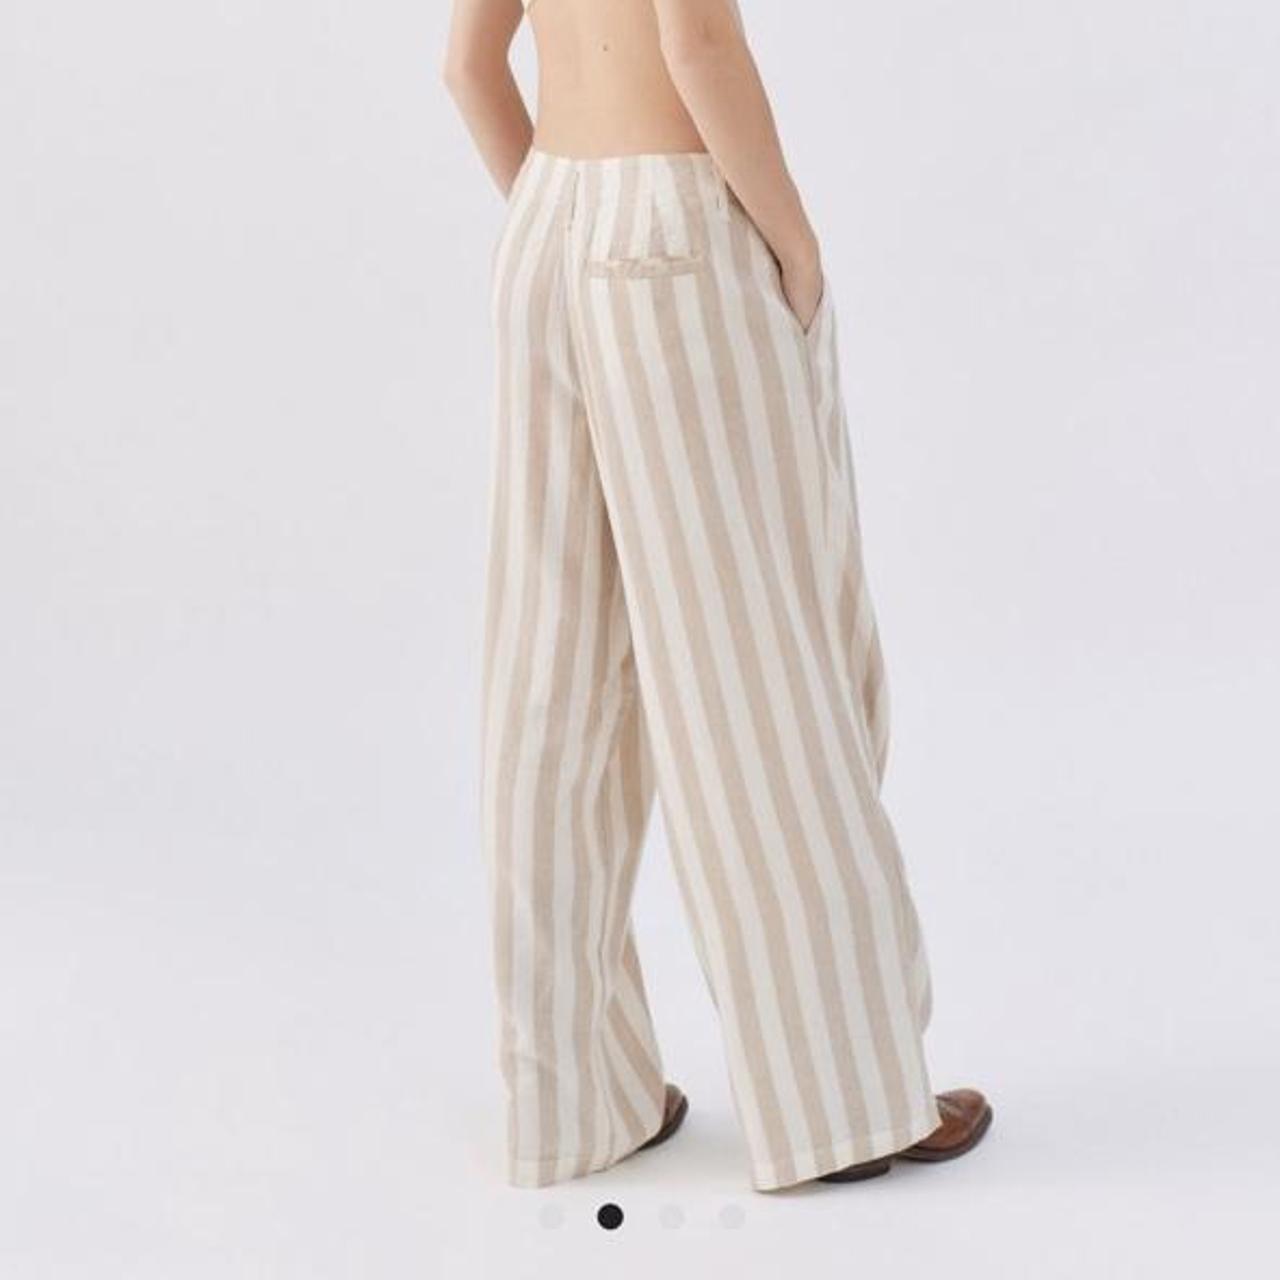 Striped Linen Pants ♡ PLEASE PAY THROUGH... - Depop